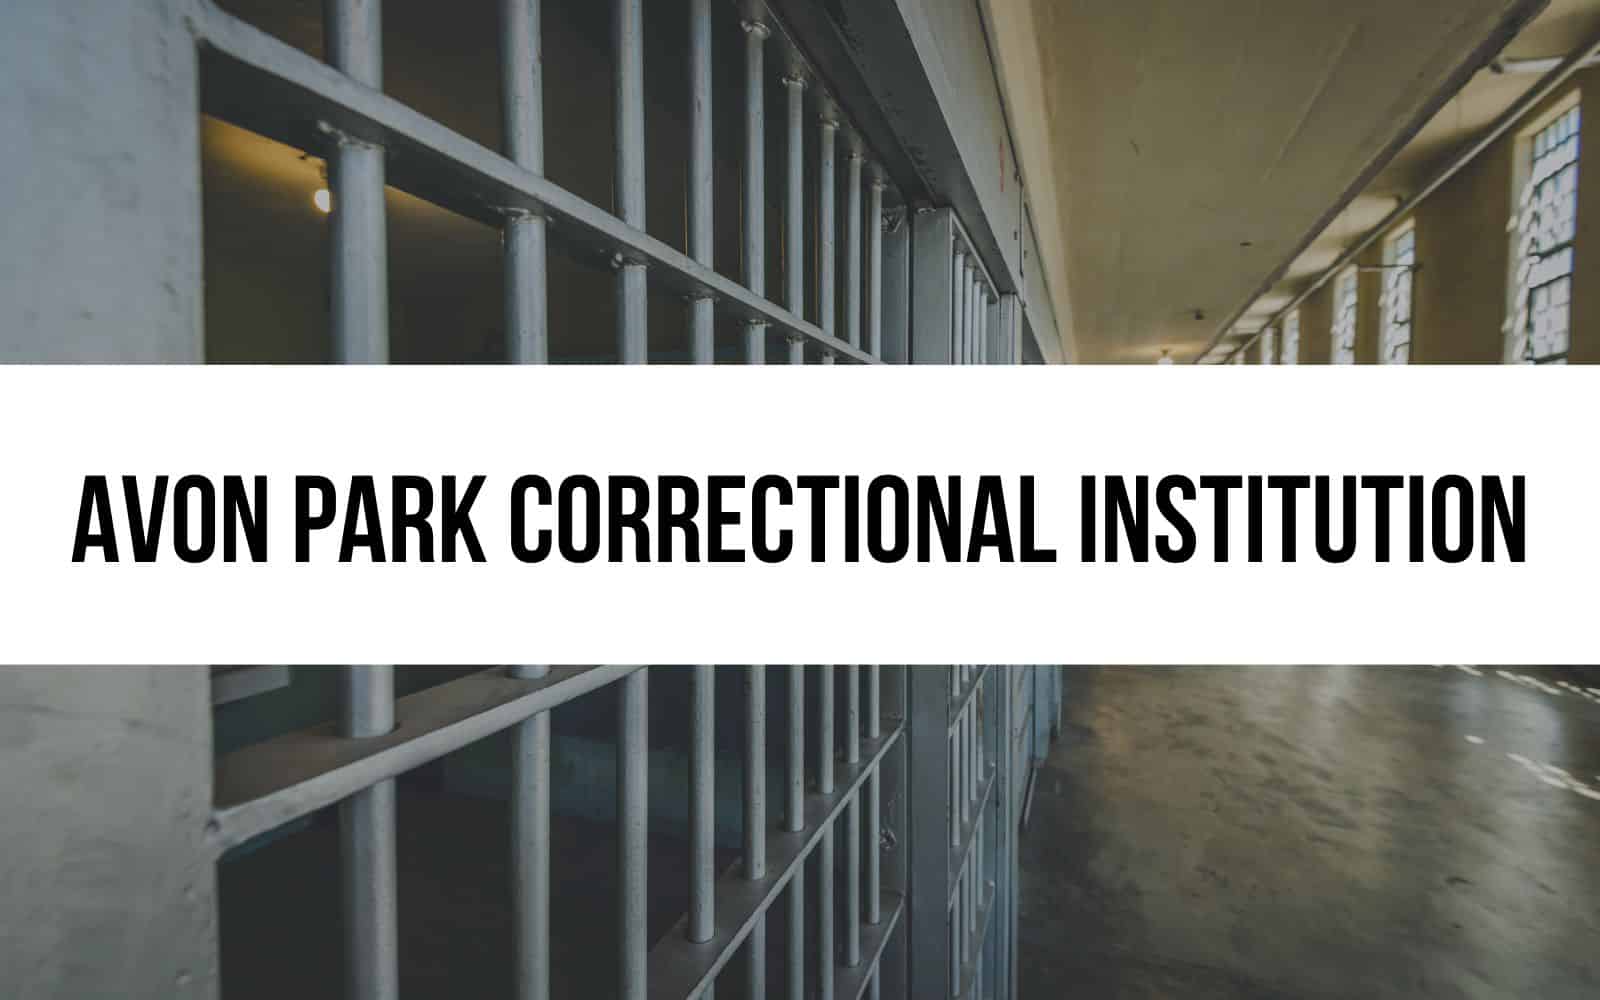 Avon Park Correctional Institution